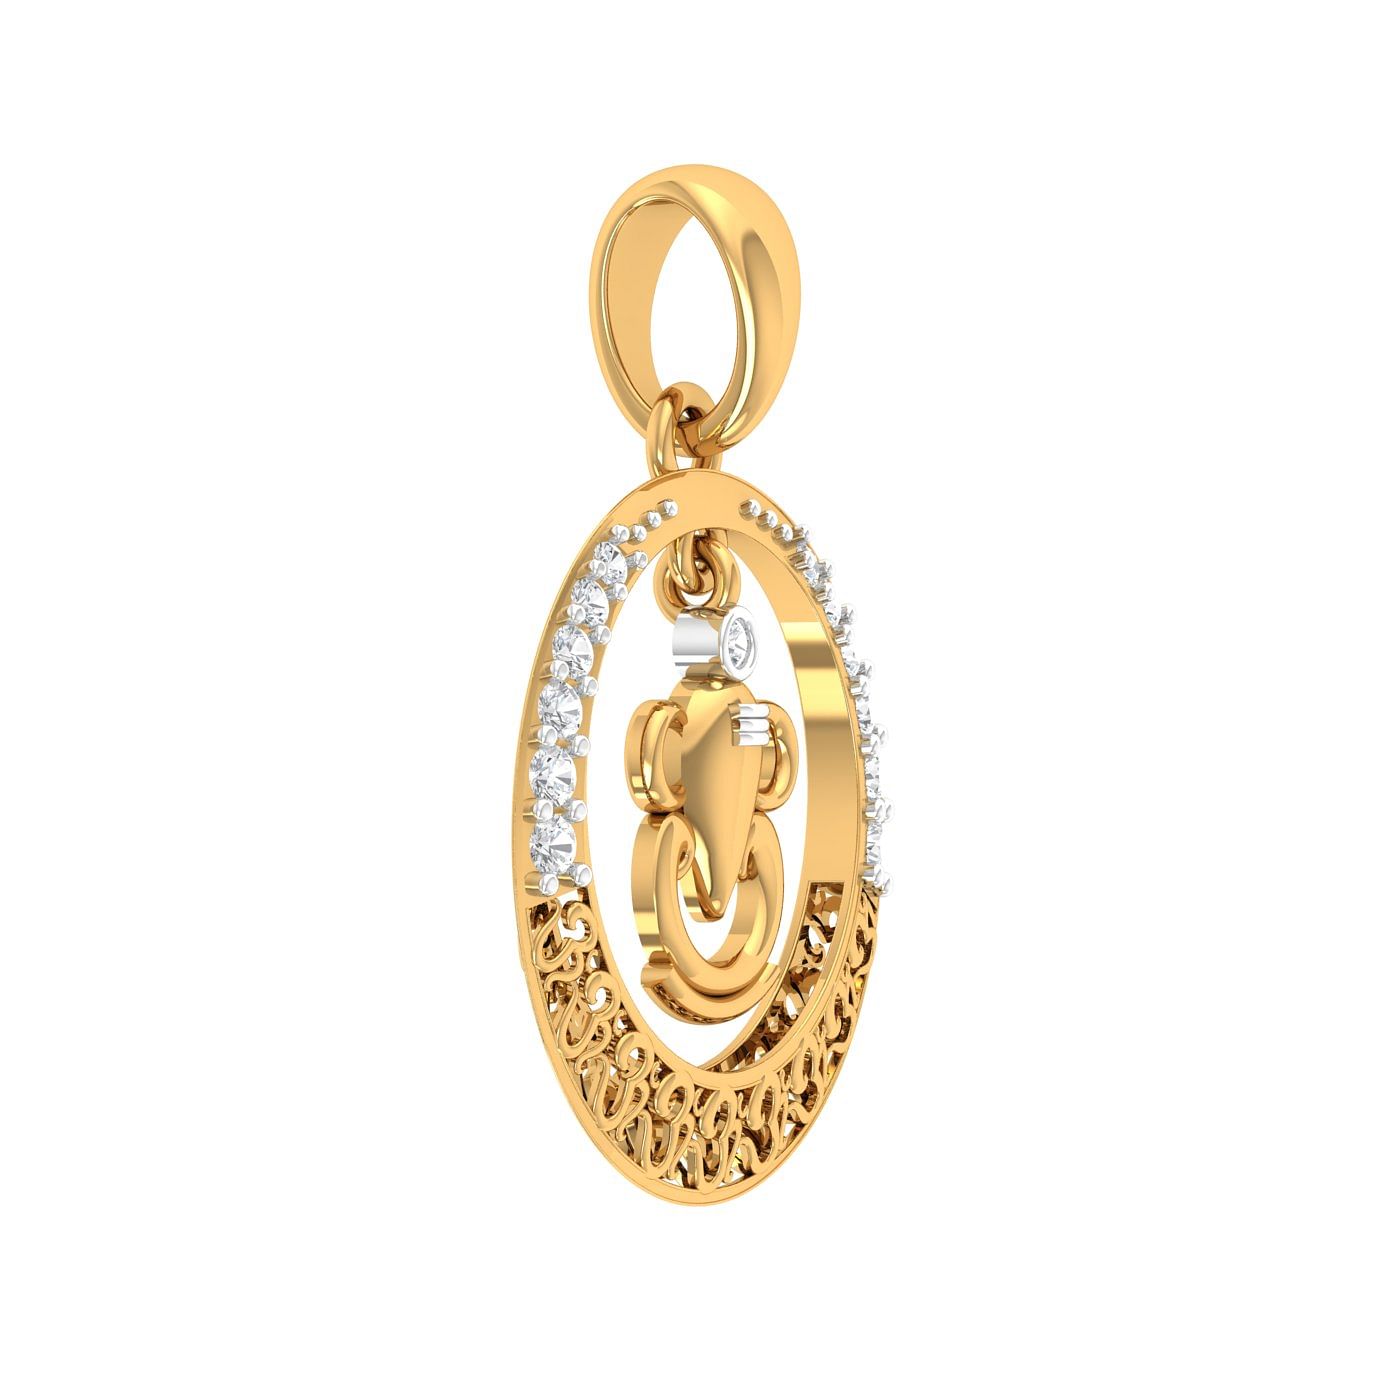 Oval multistone yellow gold diamond pendant